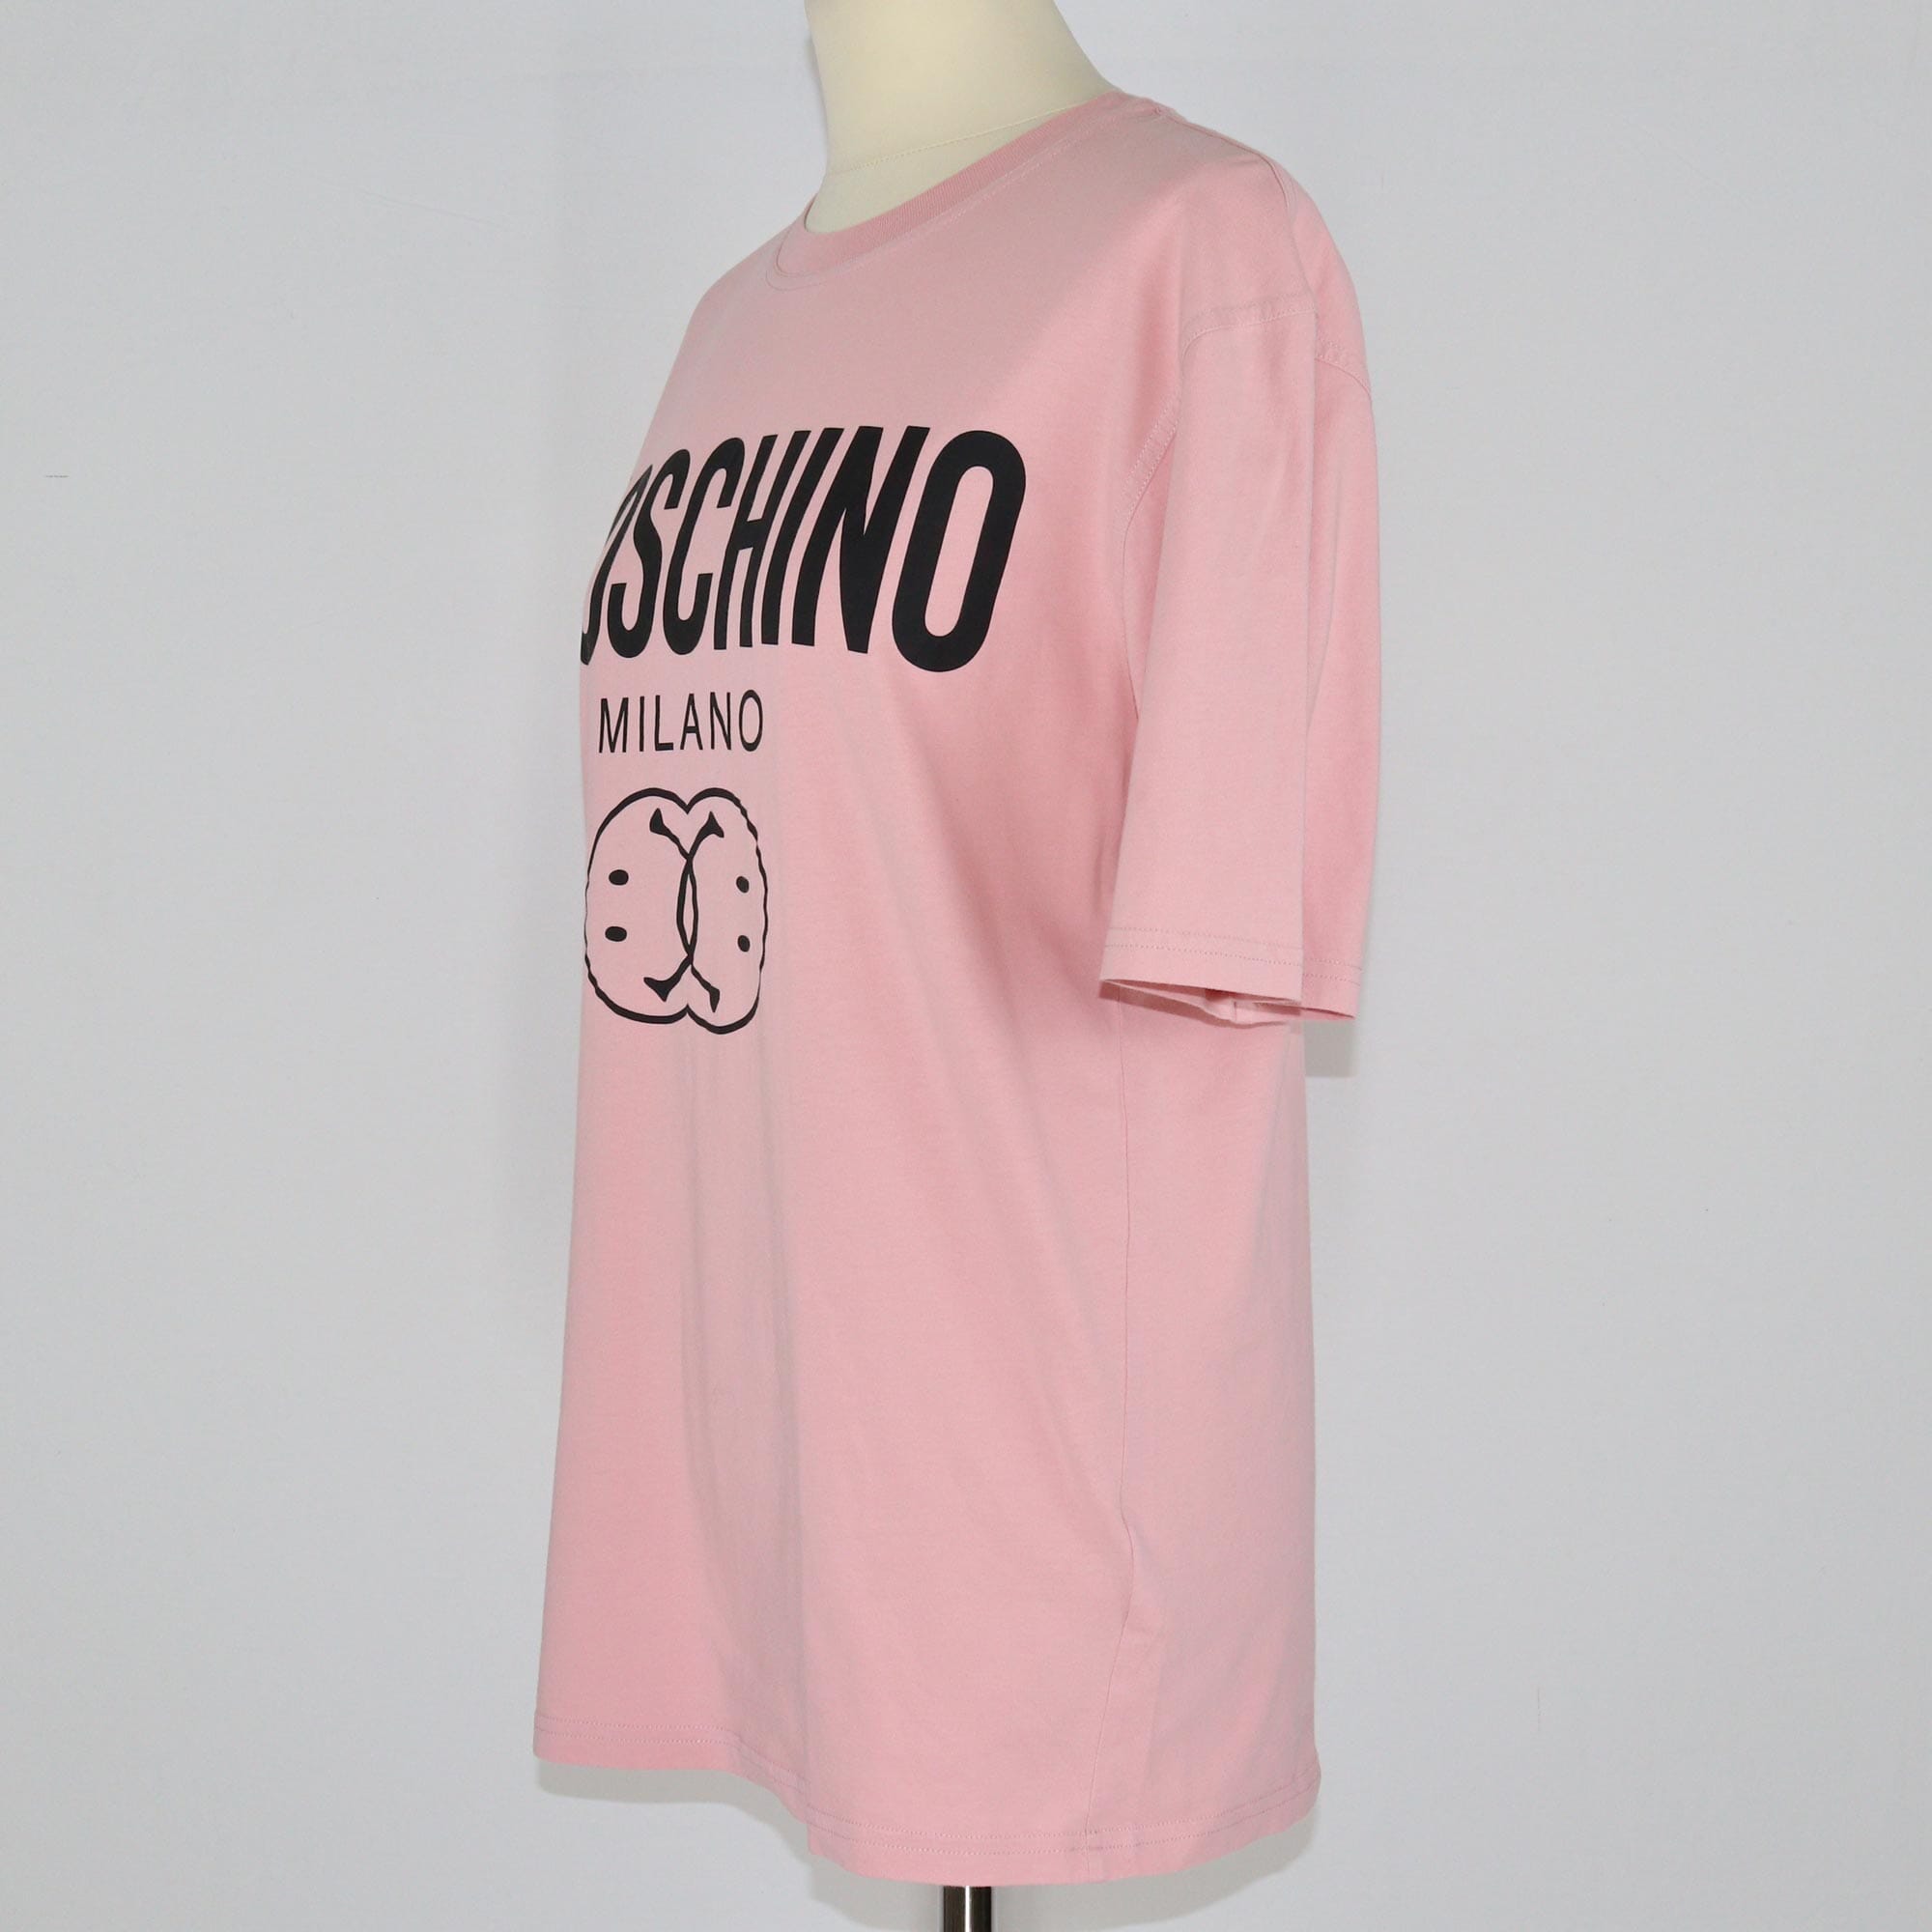 Moschino Pink Logo Printed T-Shirt Clothing Moschino 